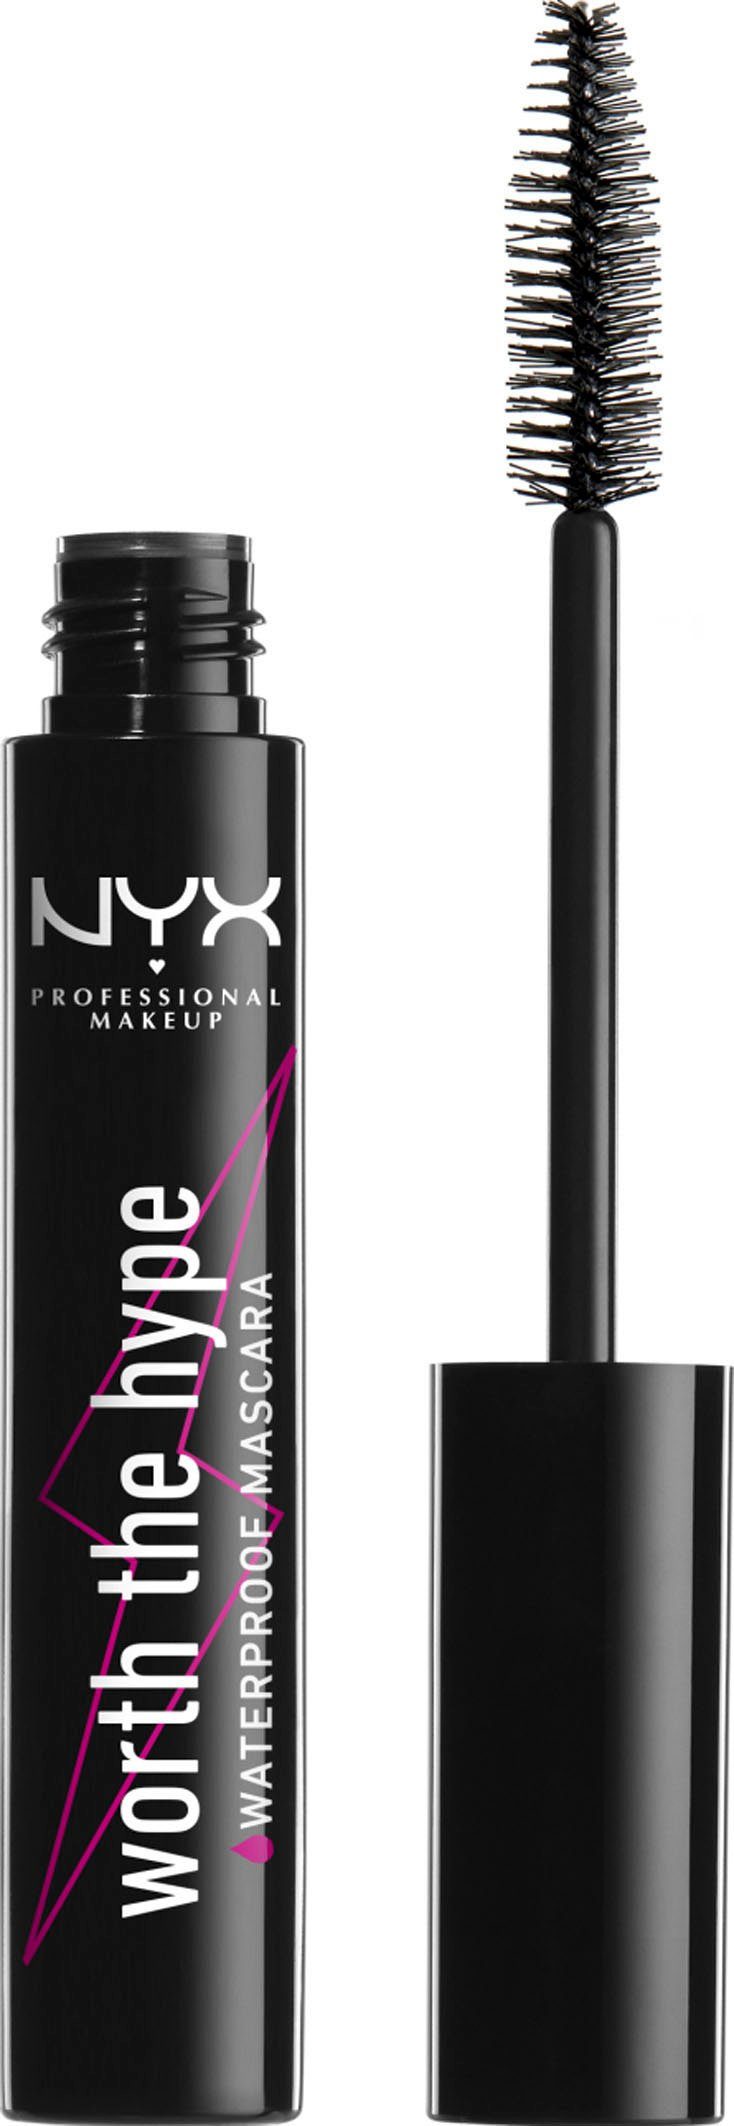 NYX Mascara Professional Hype Mascara Makeup Worth The Waterproof